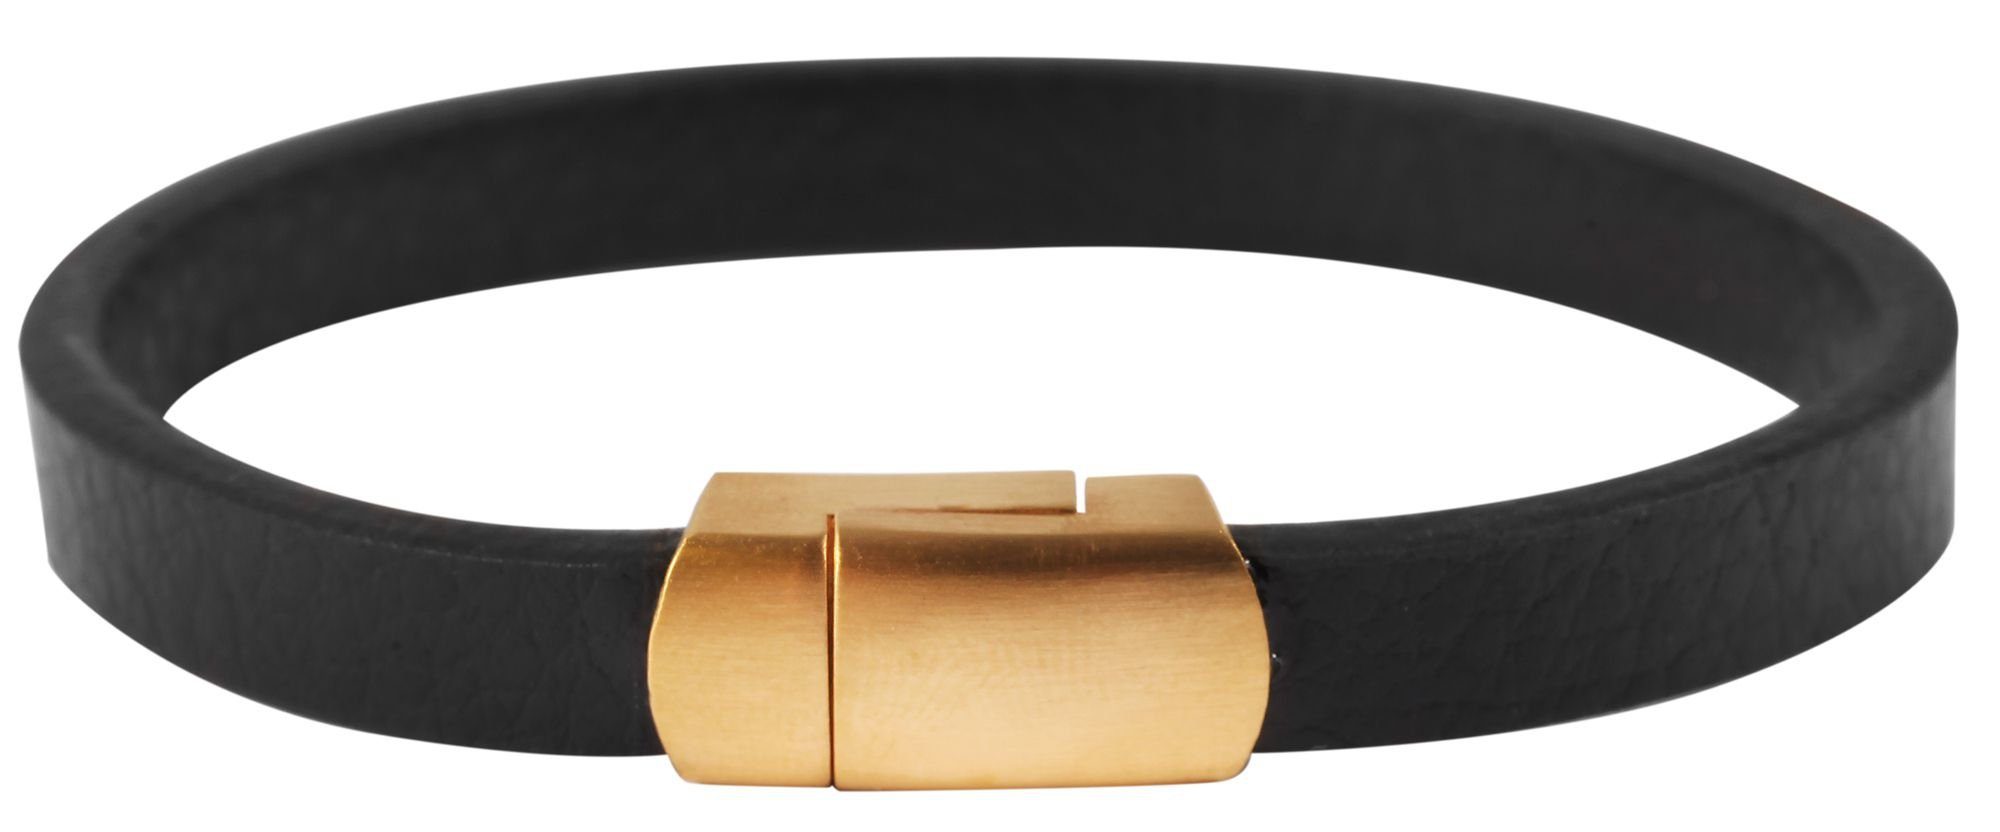 AKZENT Lederarmband Milania Unisex Armband aus Echtleder, Magnetverschluss, Schwarz (einzeln) goldfarbig